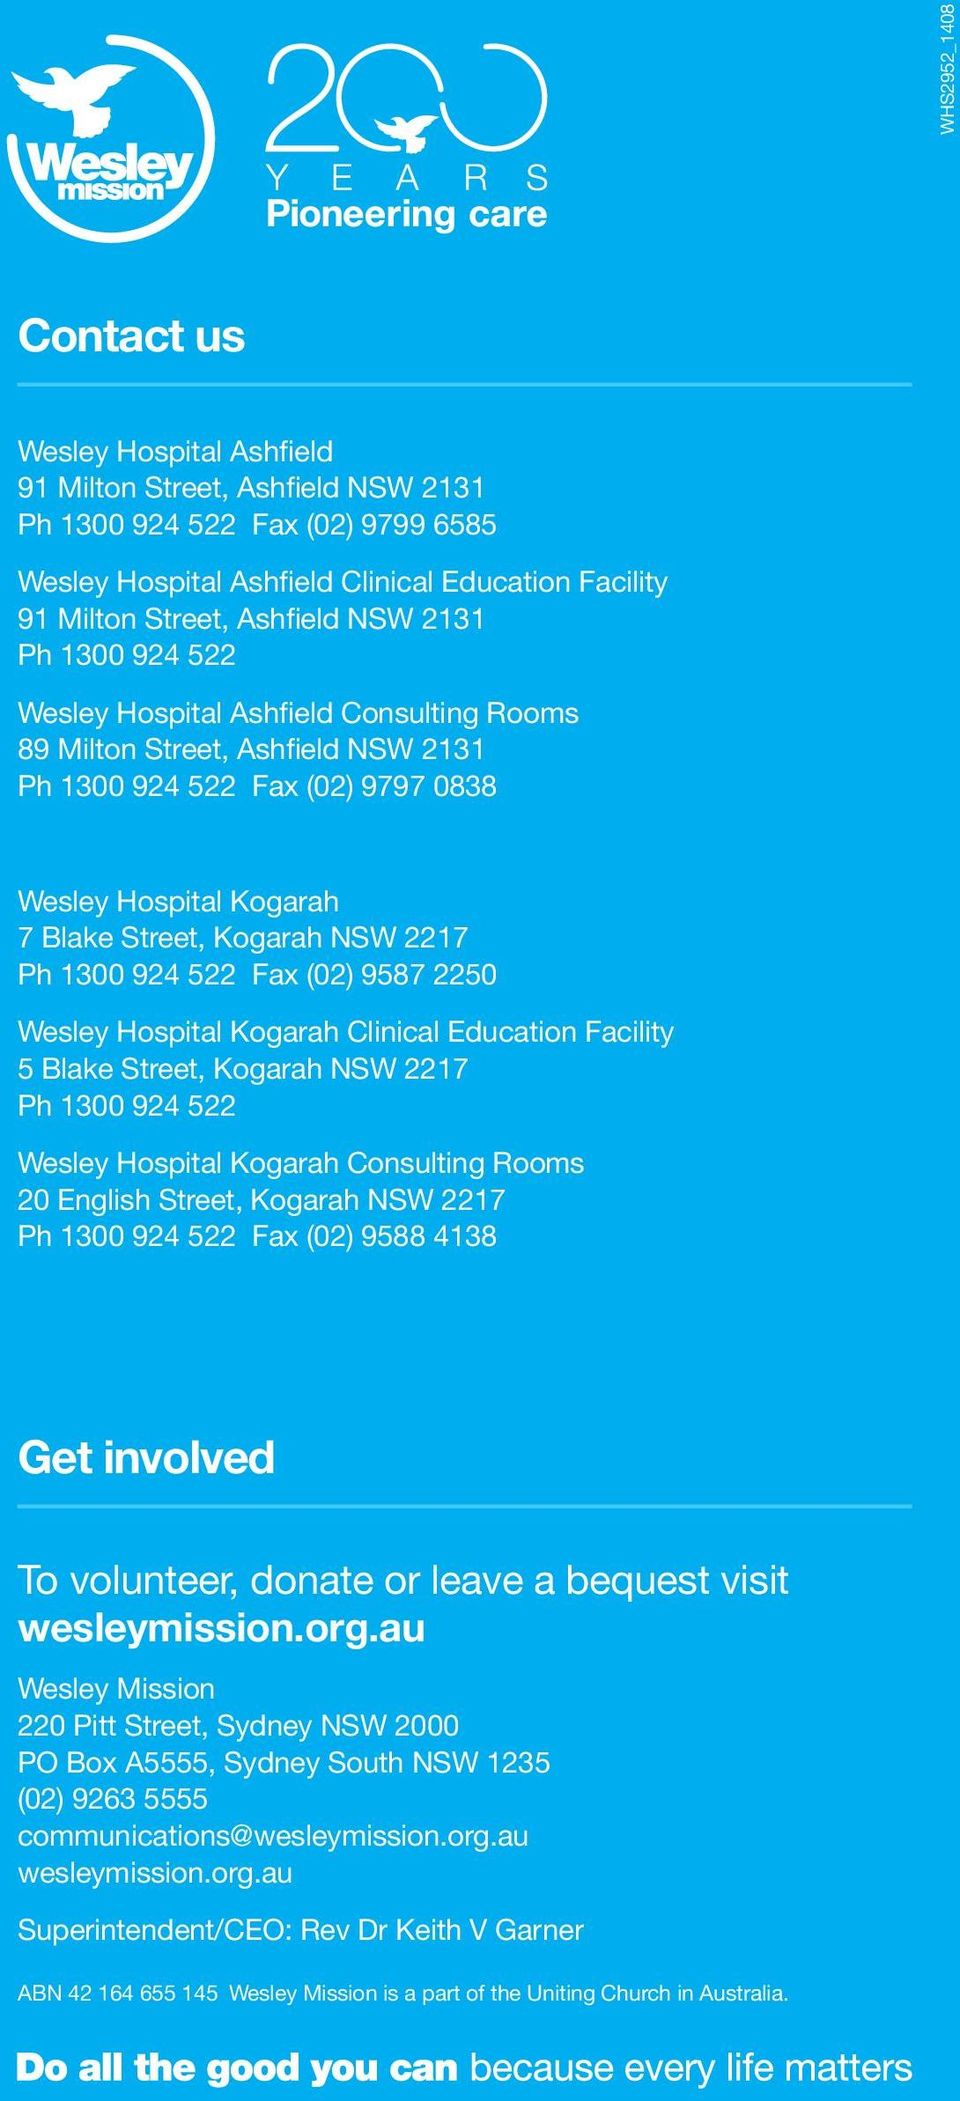 1300 924 522 Fax (02) 9587 2250 Wesley Hospital Kogarah Clinical Education Facility 5 Blake Street, Kogarah NSW 2217 Ph 1300 924 522 Wesley Hospital Kogarah Consulting Rooms 20 English Street,